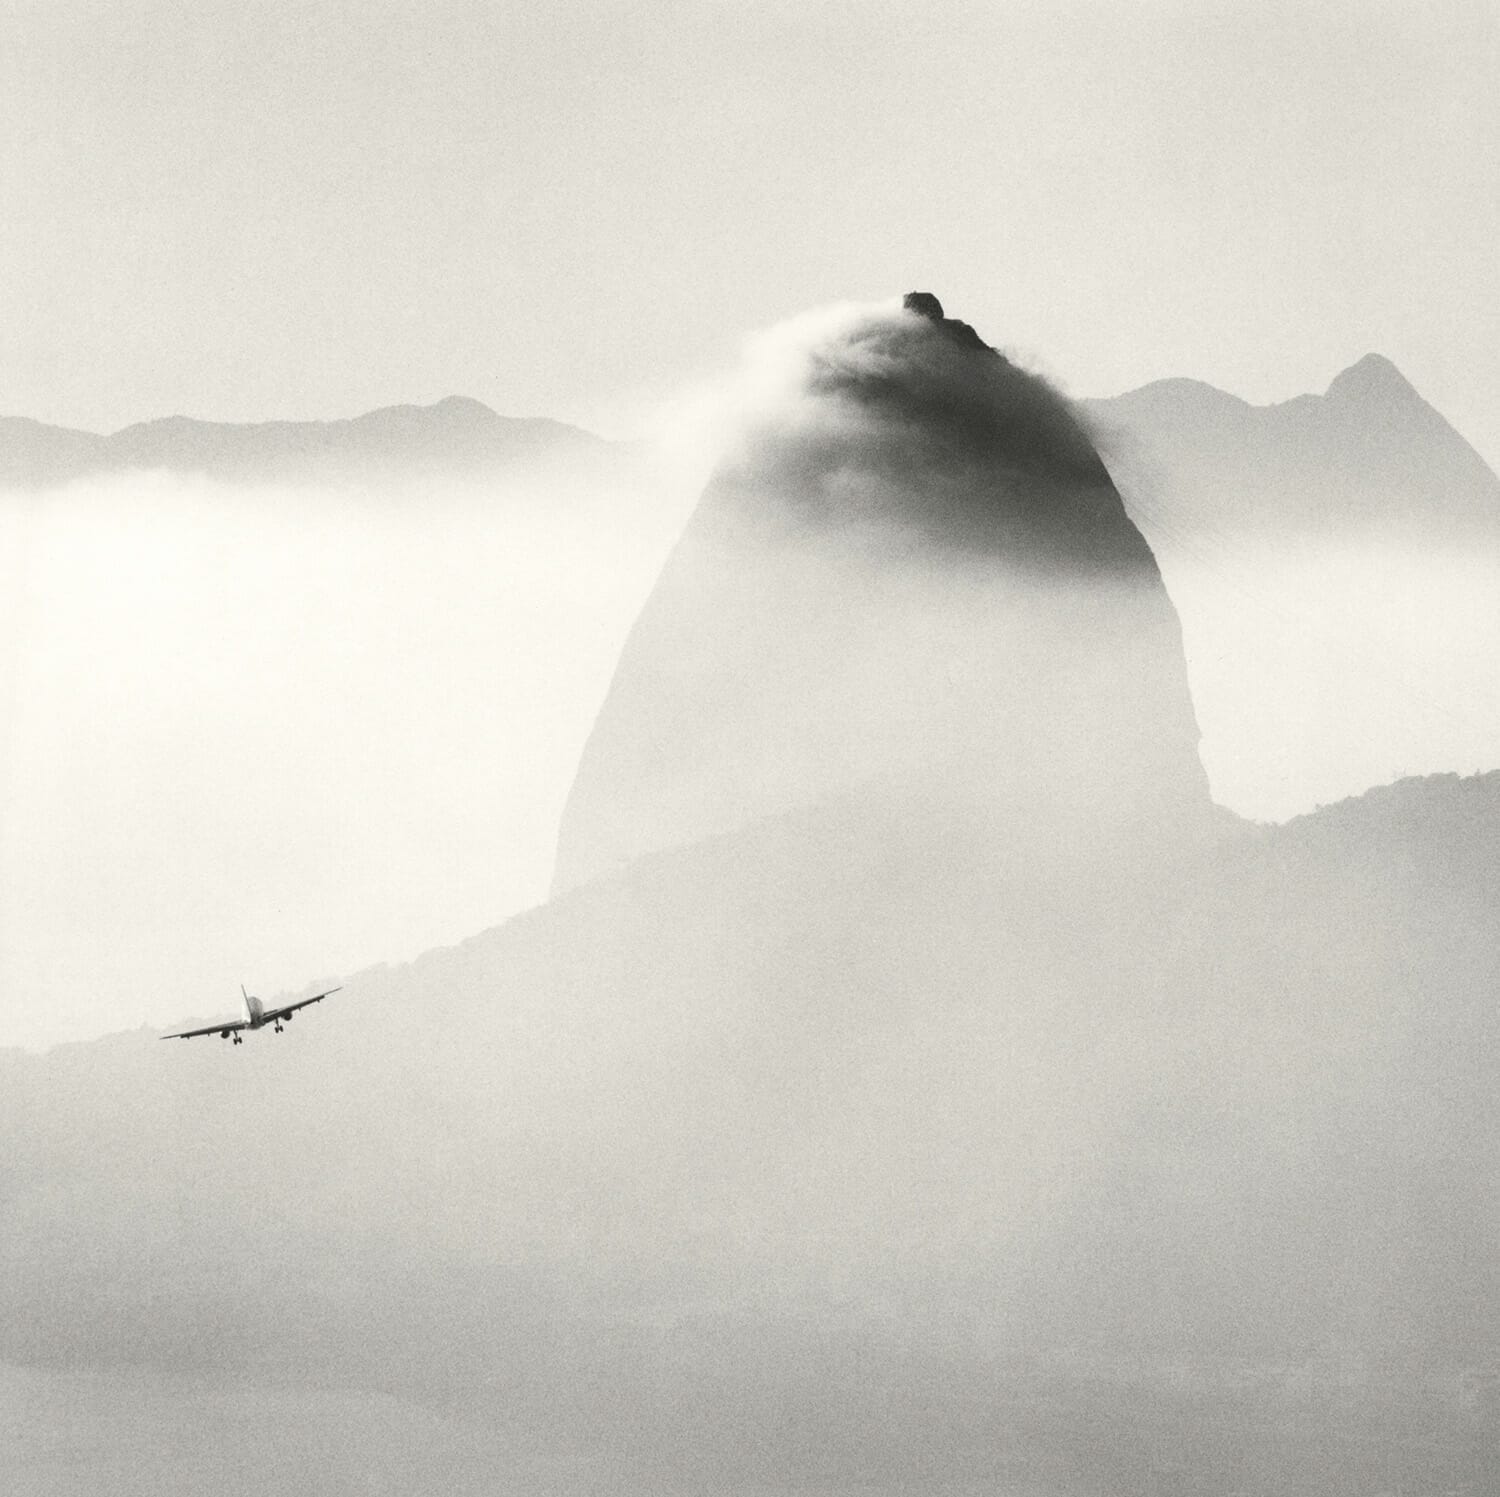 Plane and Sugar Loaf Mountain, Rio de Janeiro, Brazil